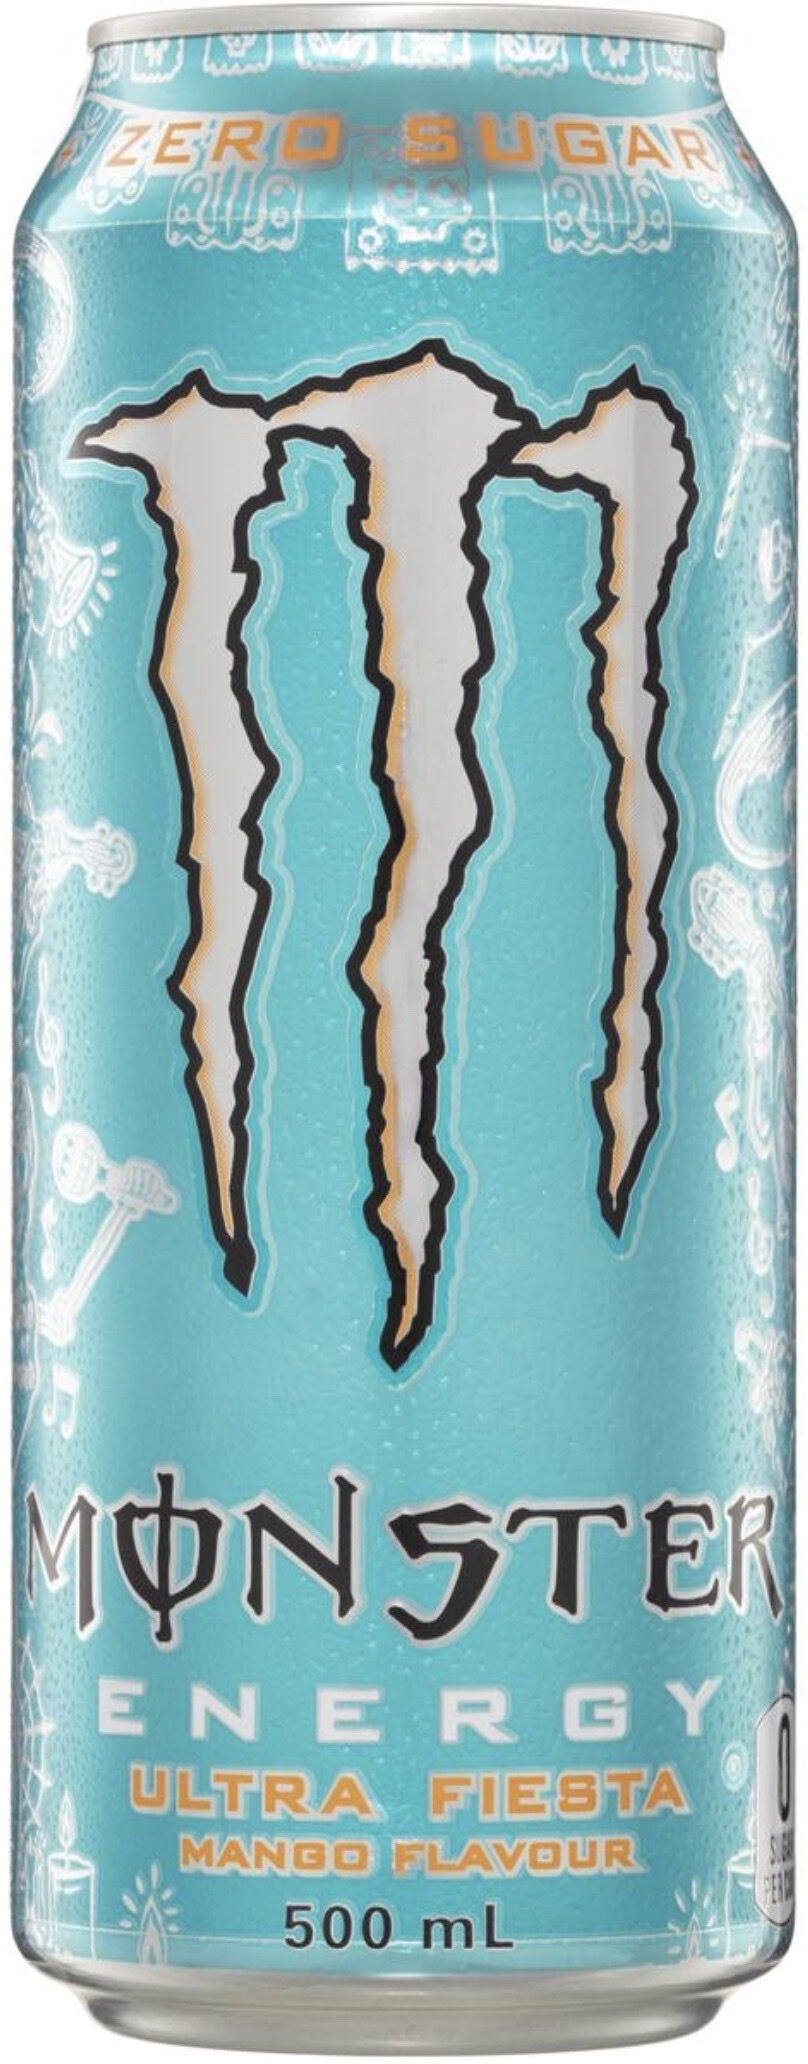 Monster Energy Ultra Fiesta Mango Flavour - Produit - en